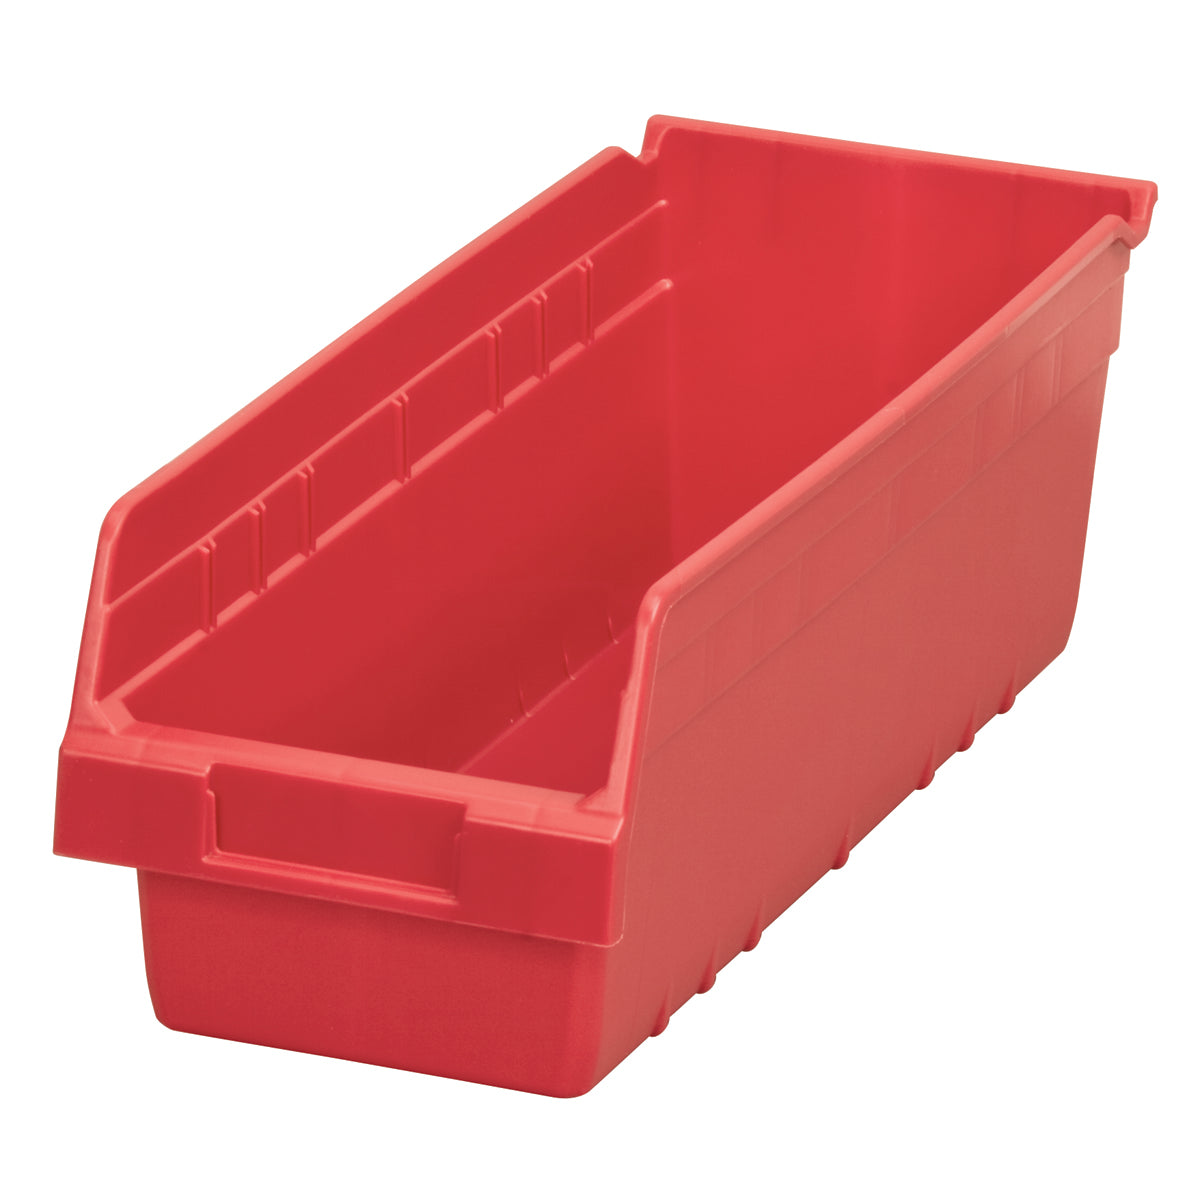 Akro-Mils (10 pack) 30098 Plastic Storage ShelfMax Bin Container